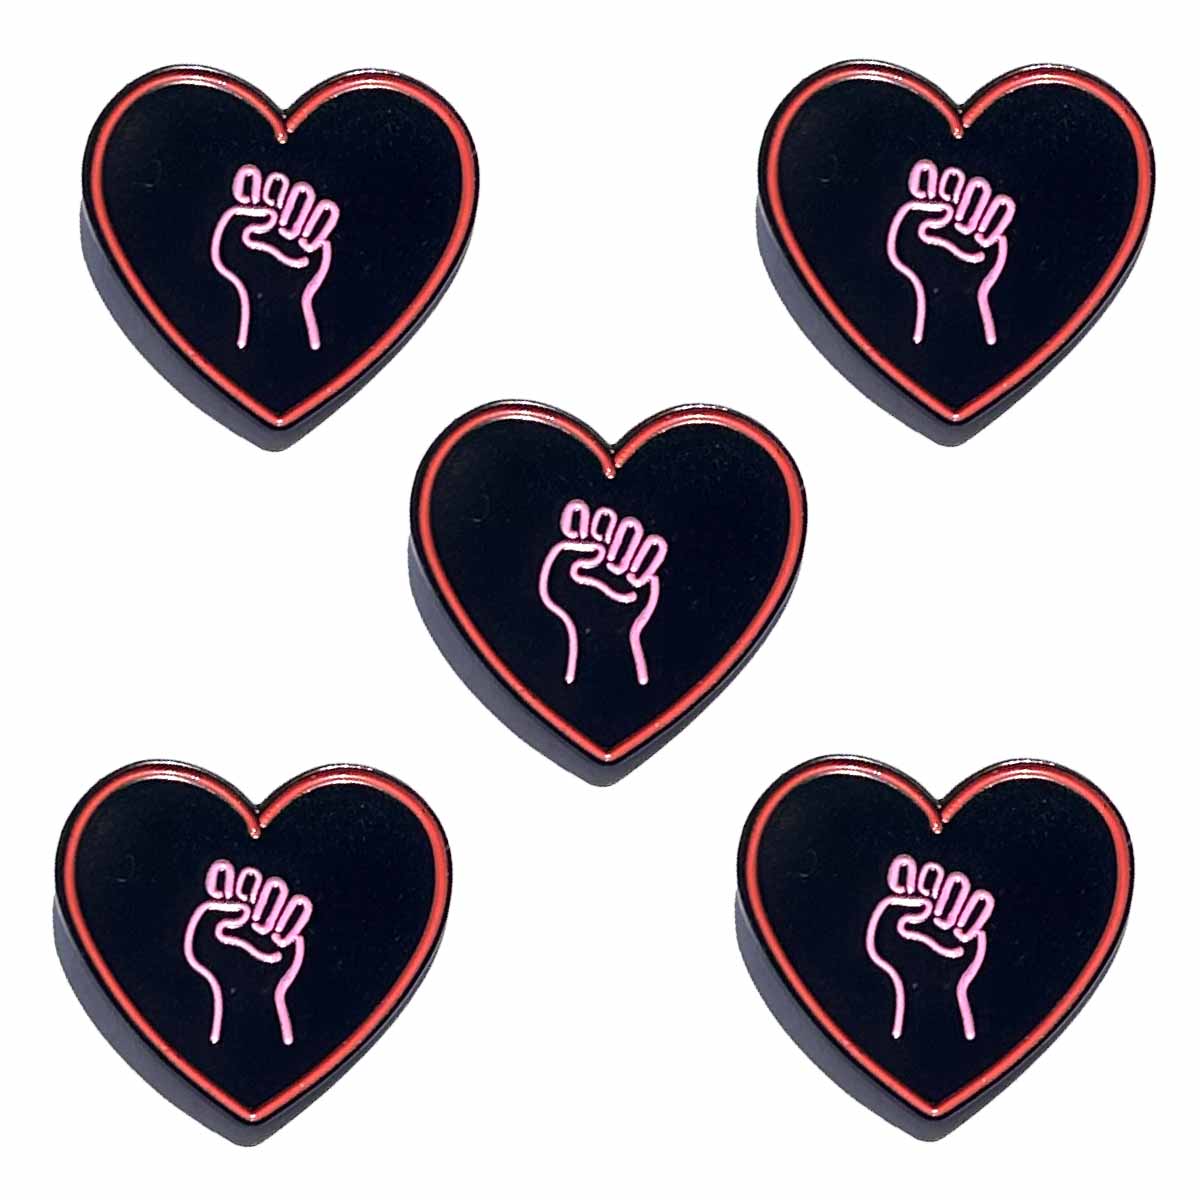 5 Love As Activism heart solidarity fist pins